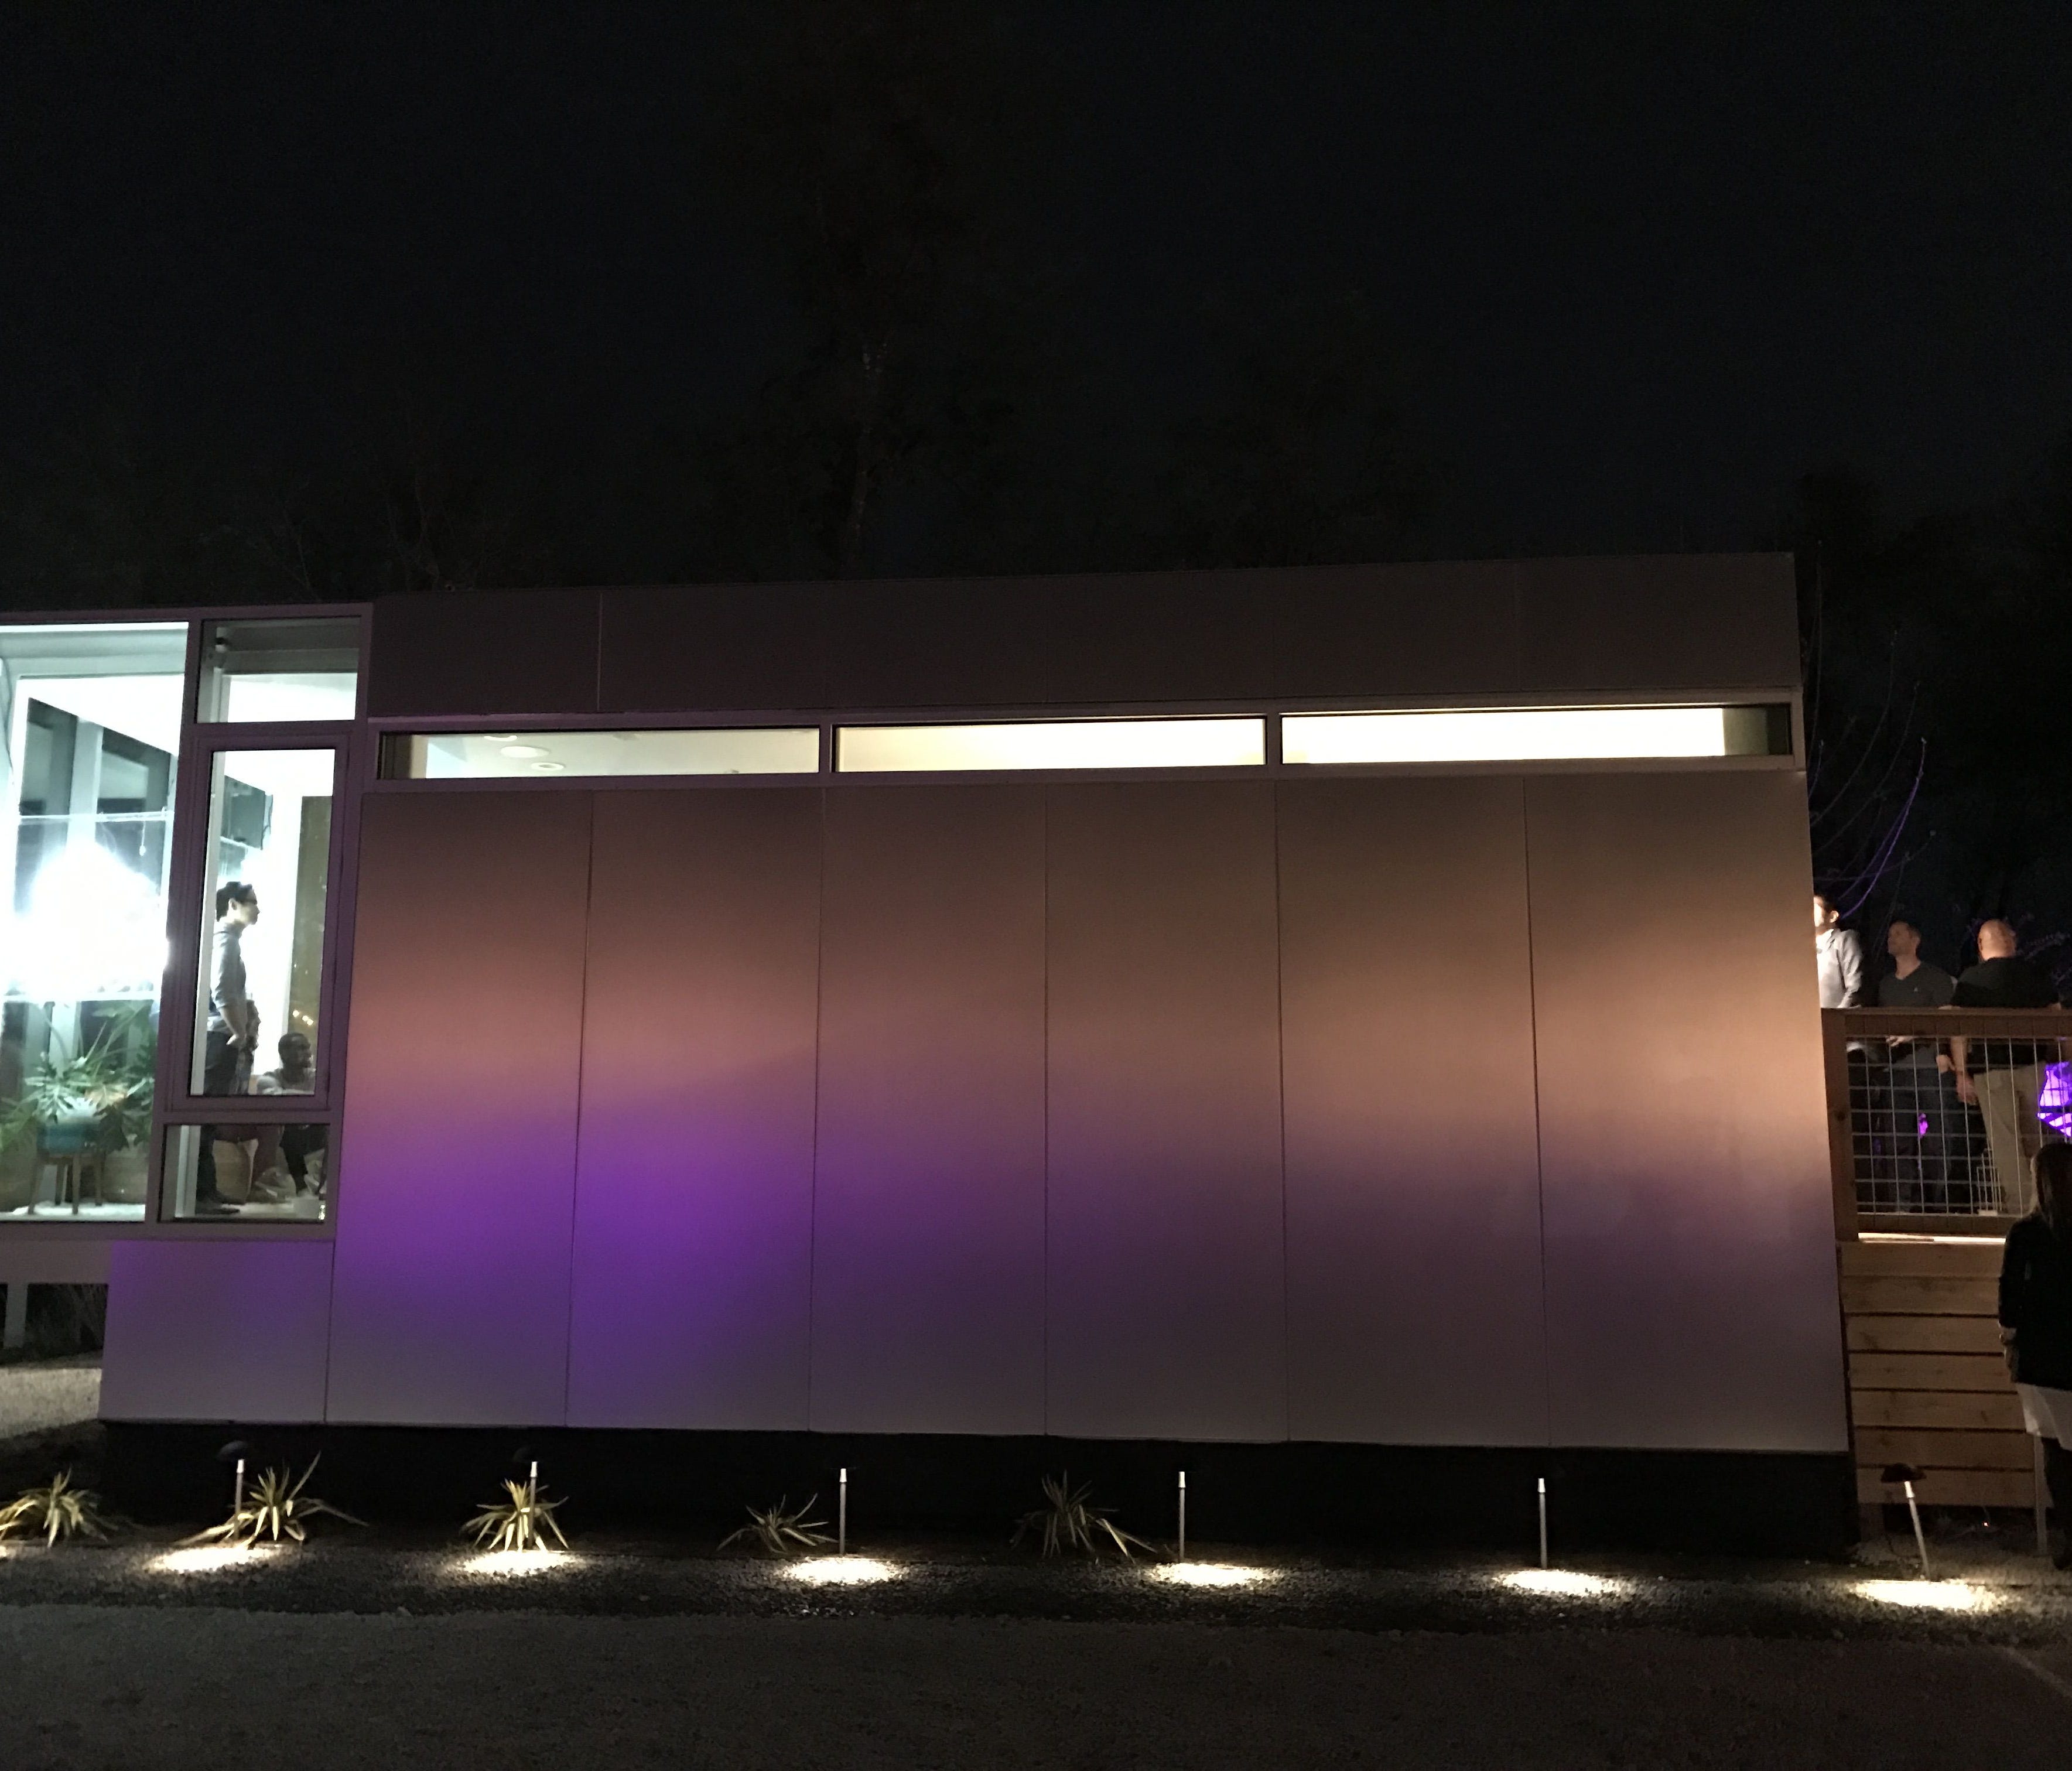 A night view of Kasita mini-home at SXSW Interactive show.